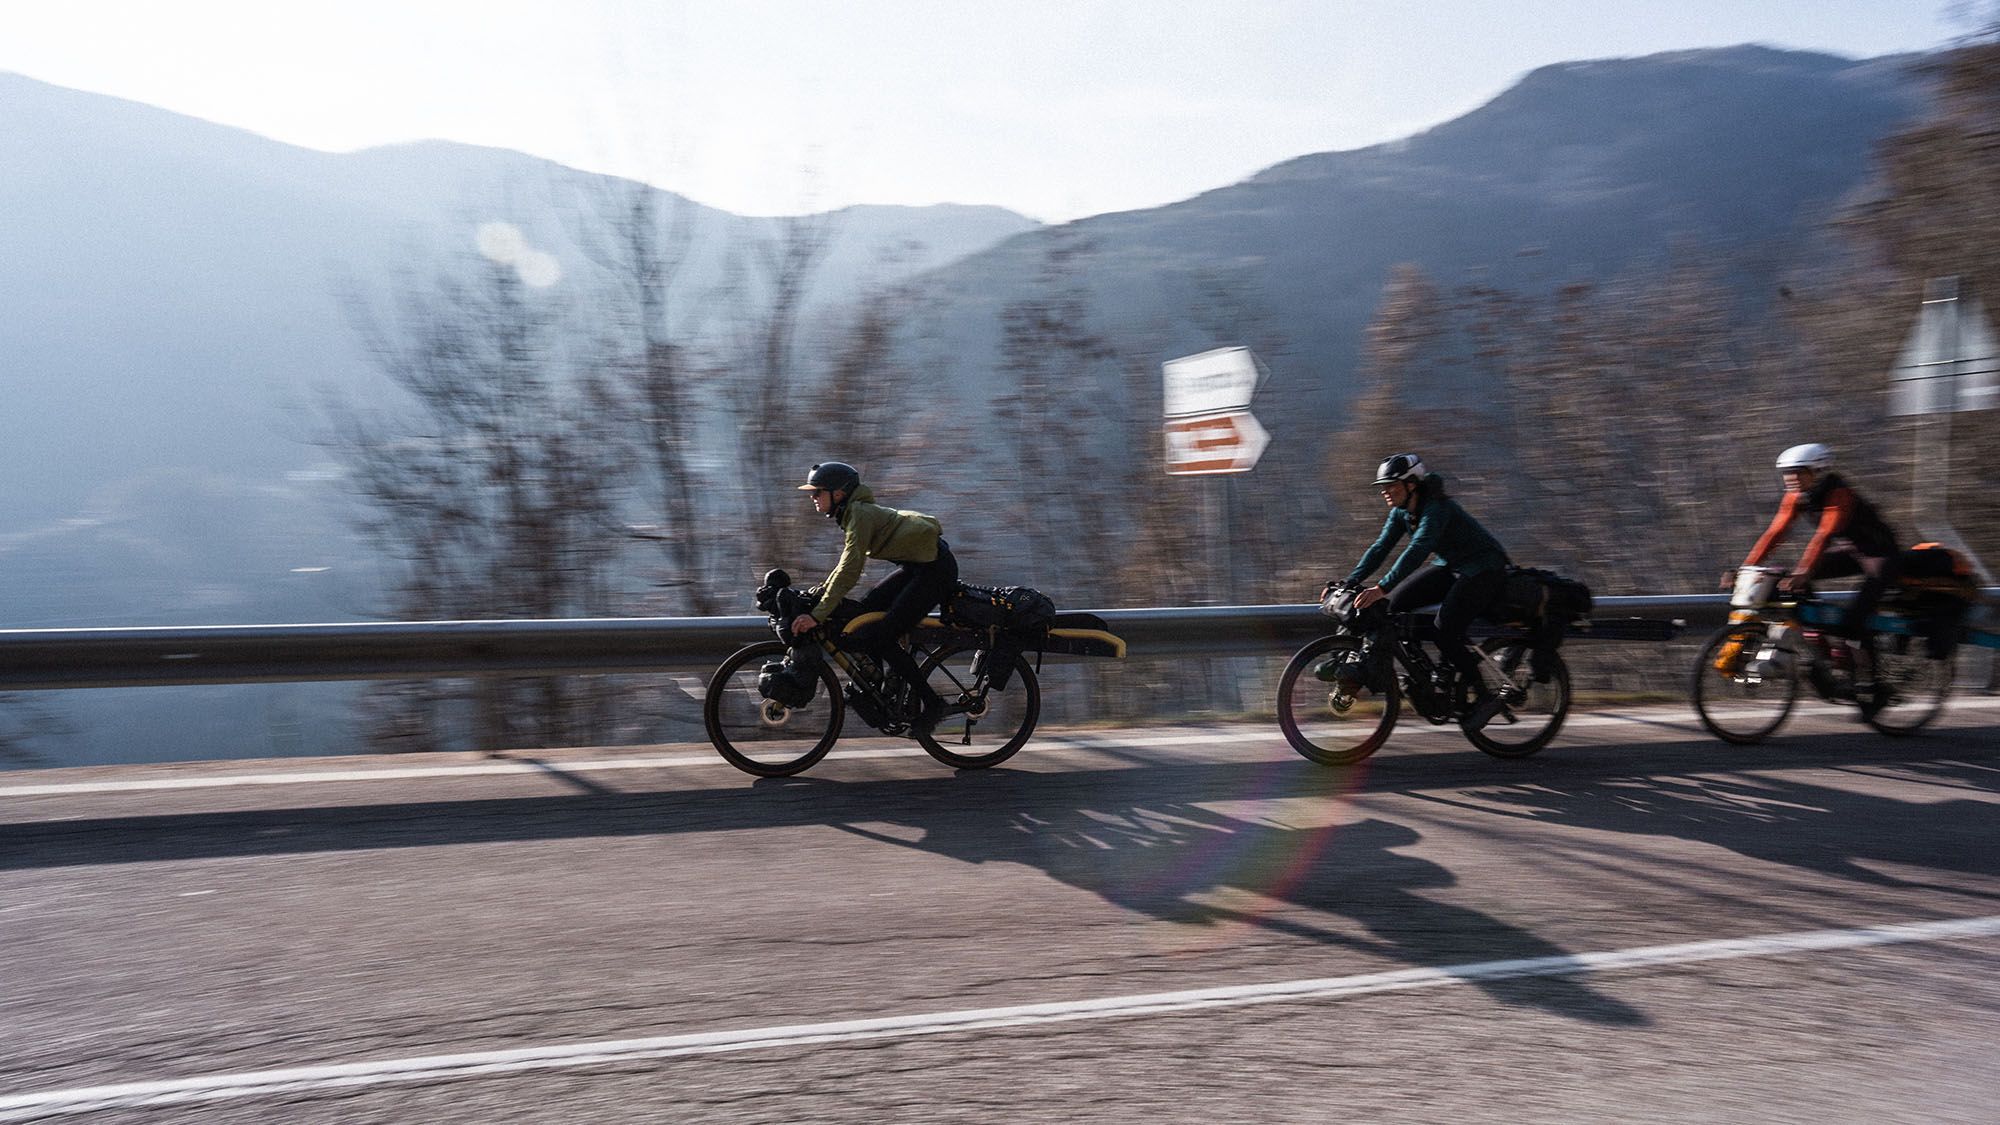 Video: Ride to Ski – Bikepacking and Skiing Adventure Through the Dolomites